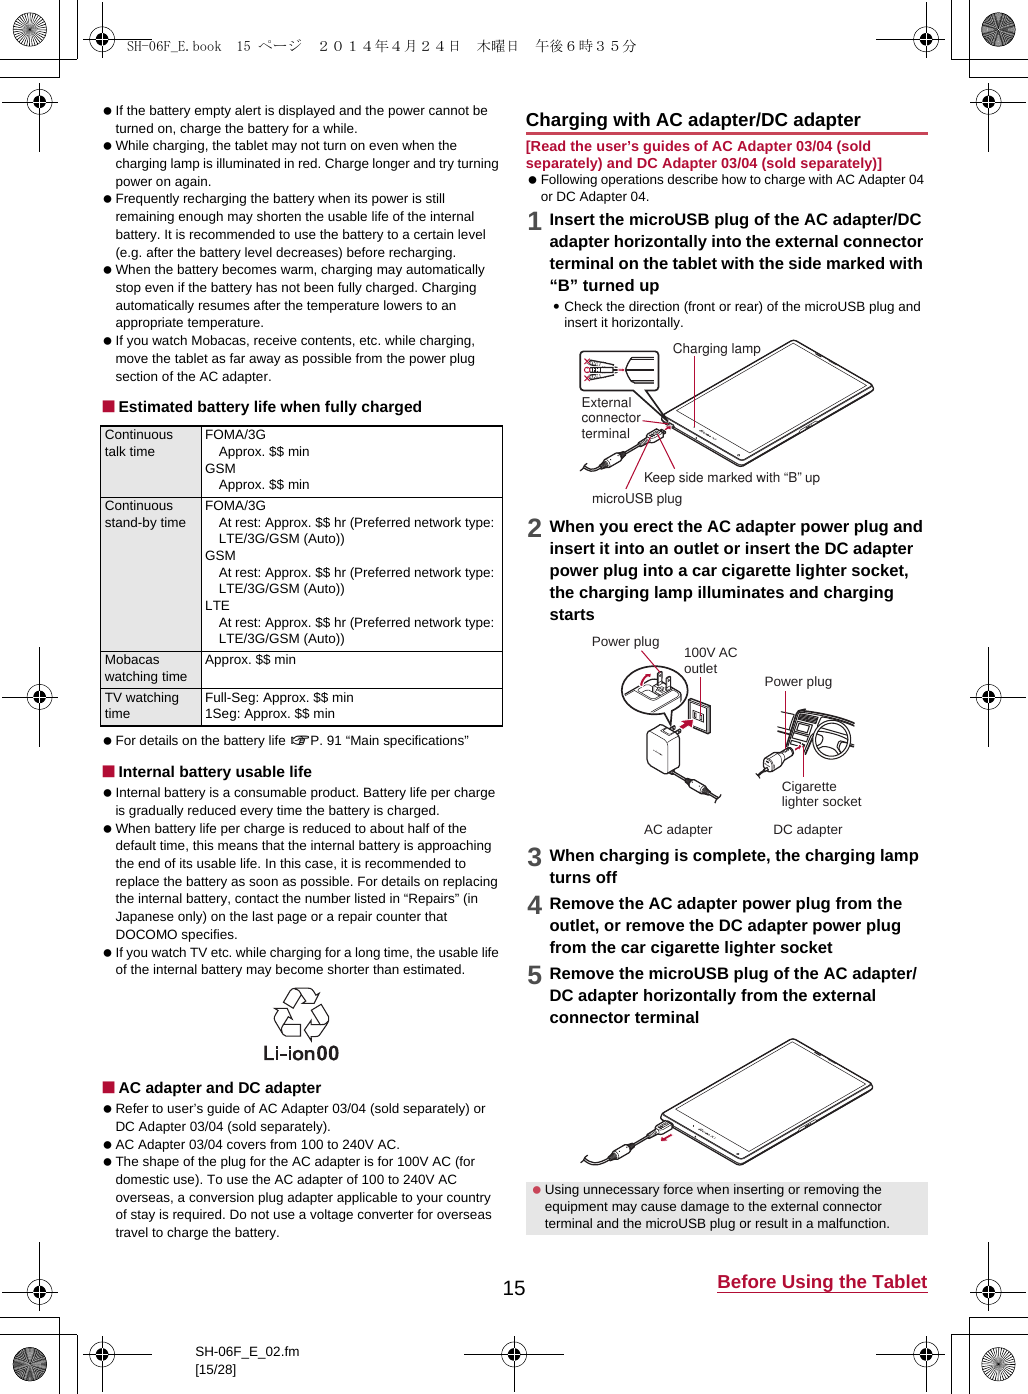 Page 11 of Sharp HRO00208 Hand Held Mini Phablet User Manual Manual